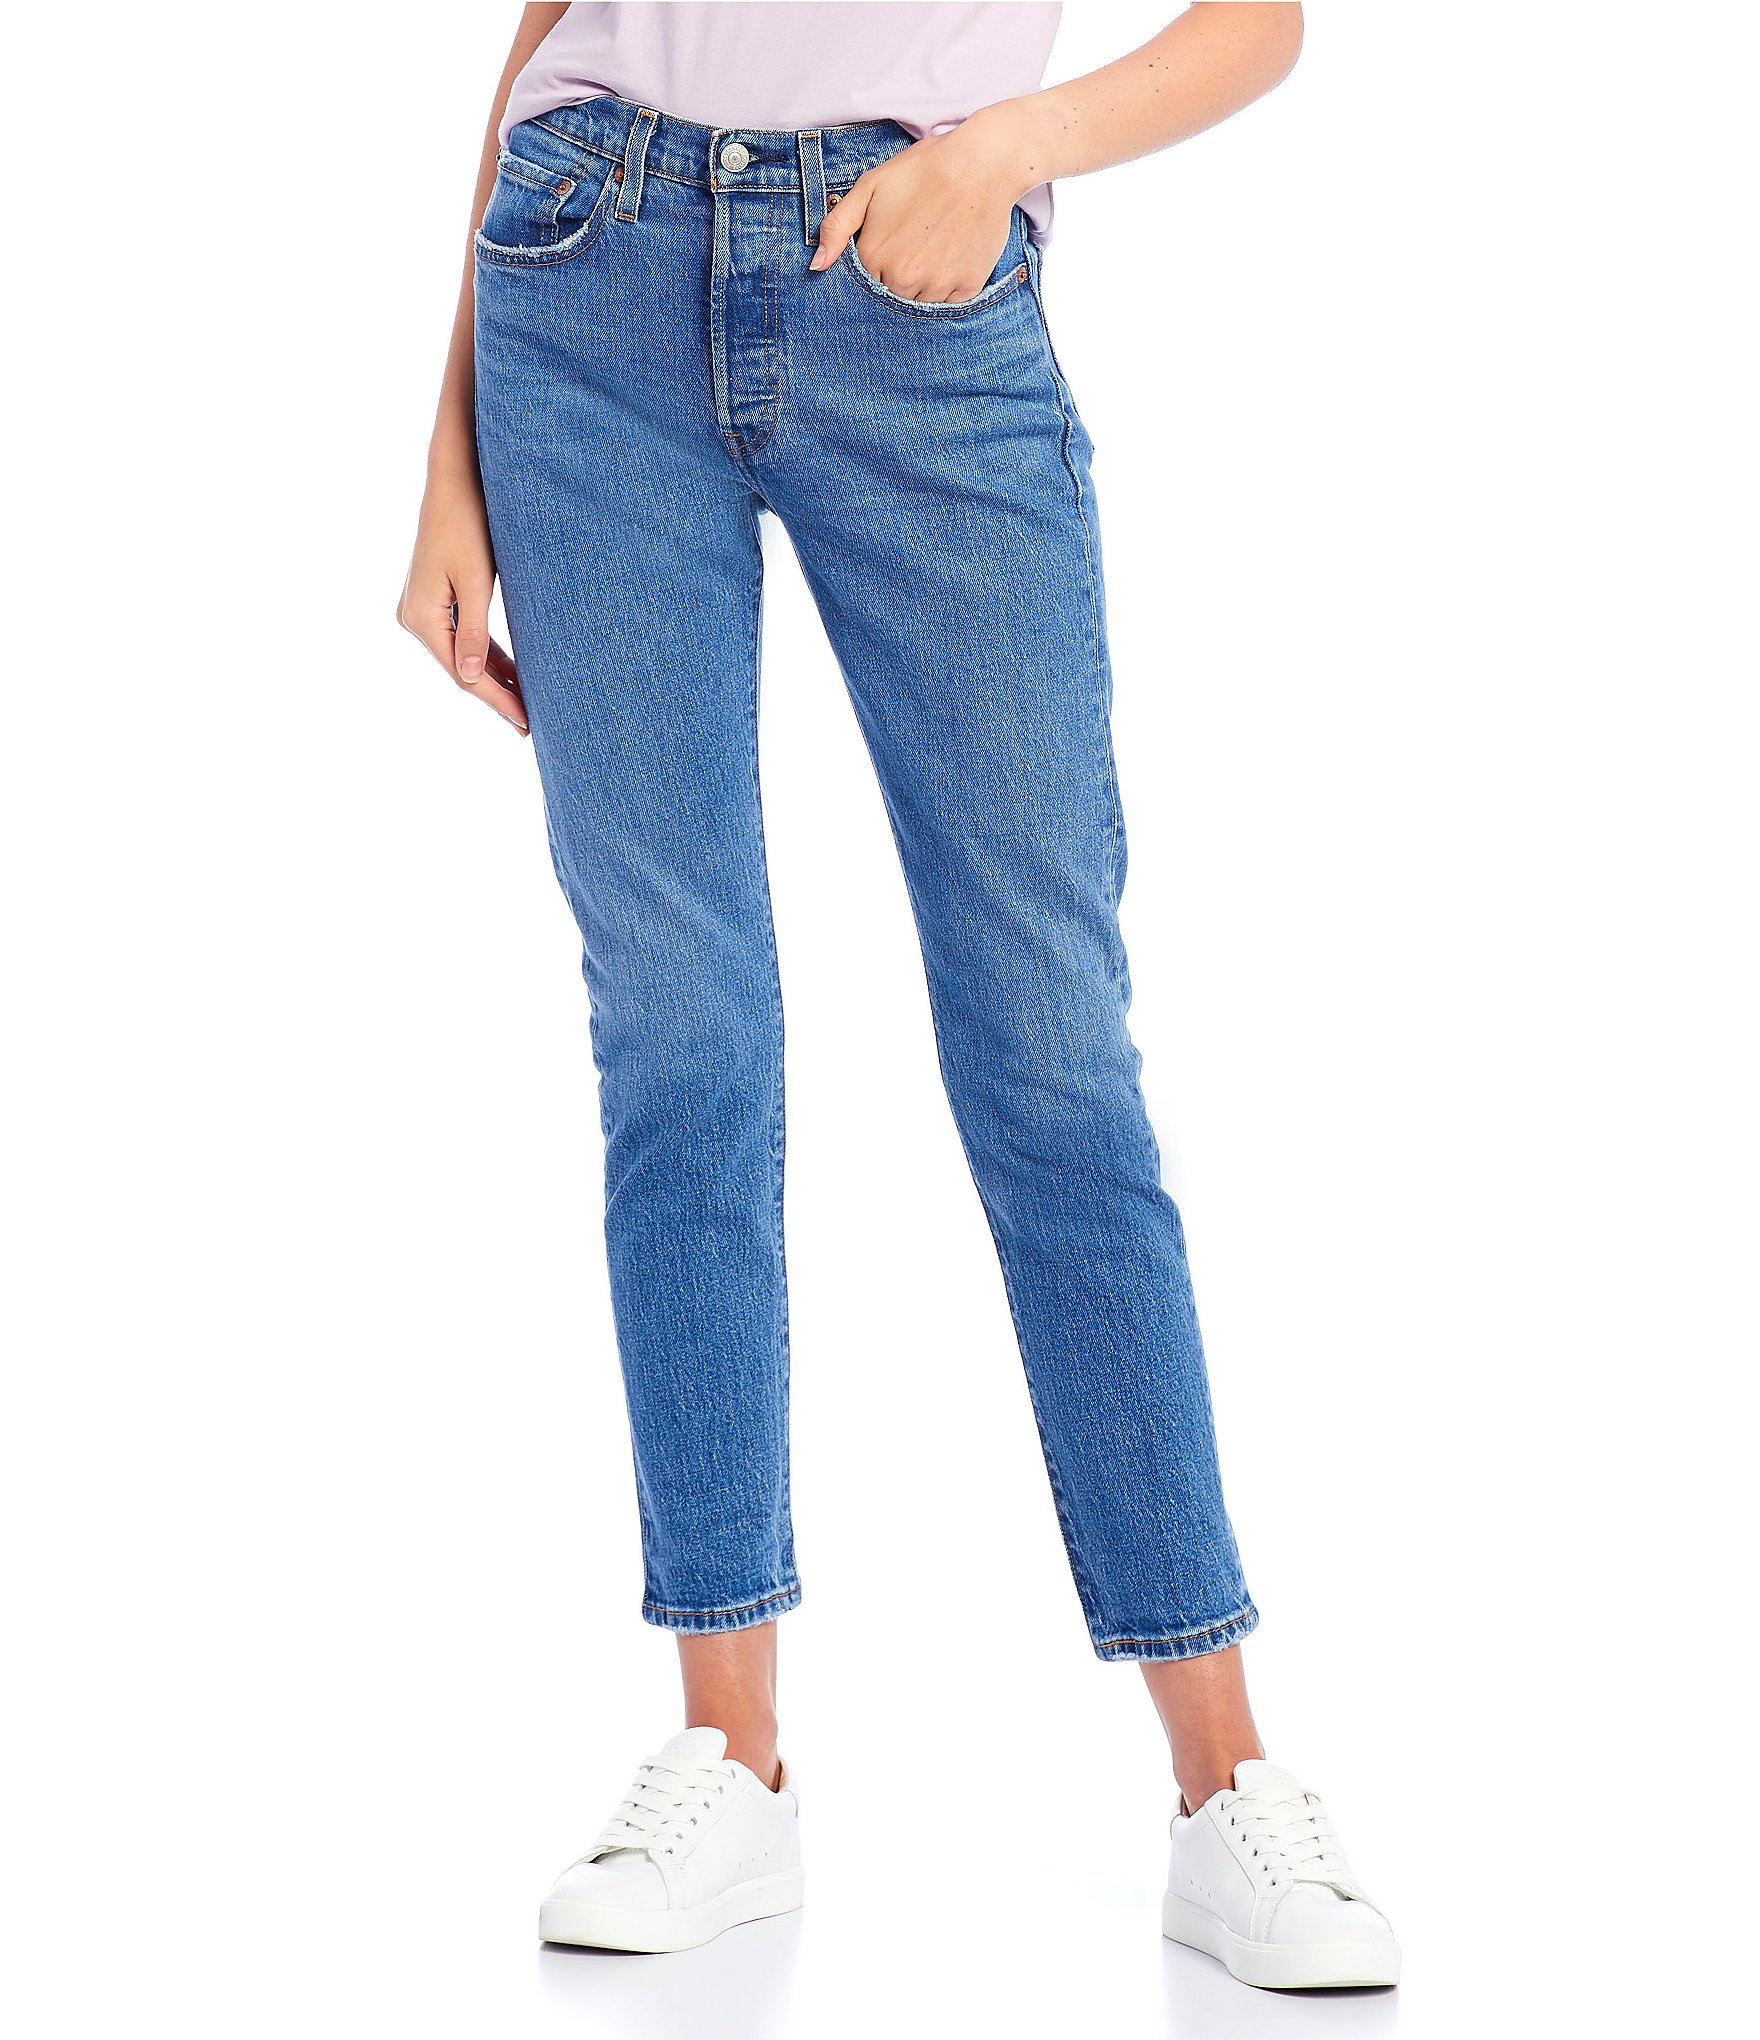 jeans 501 skinny